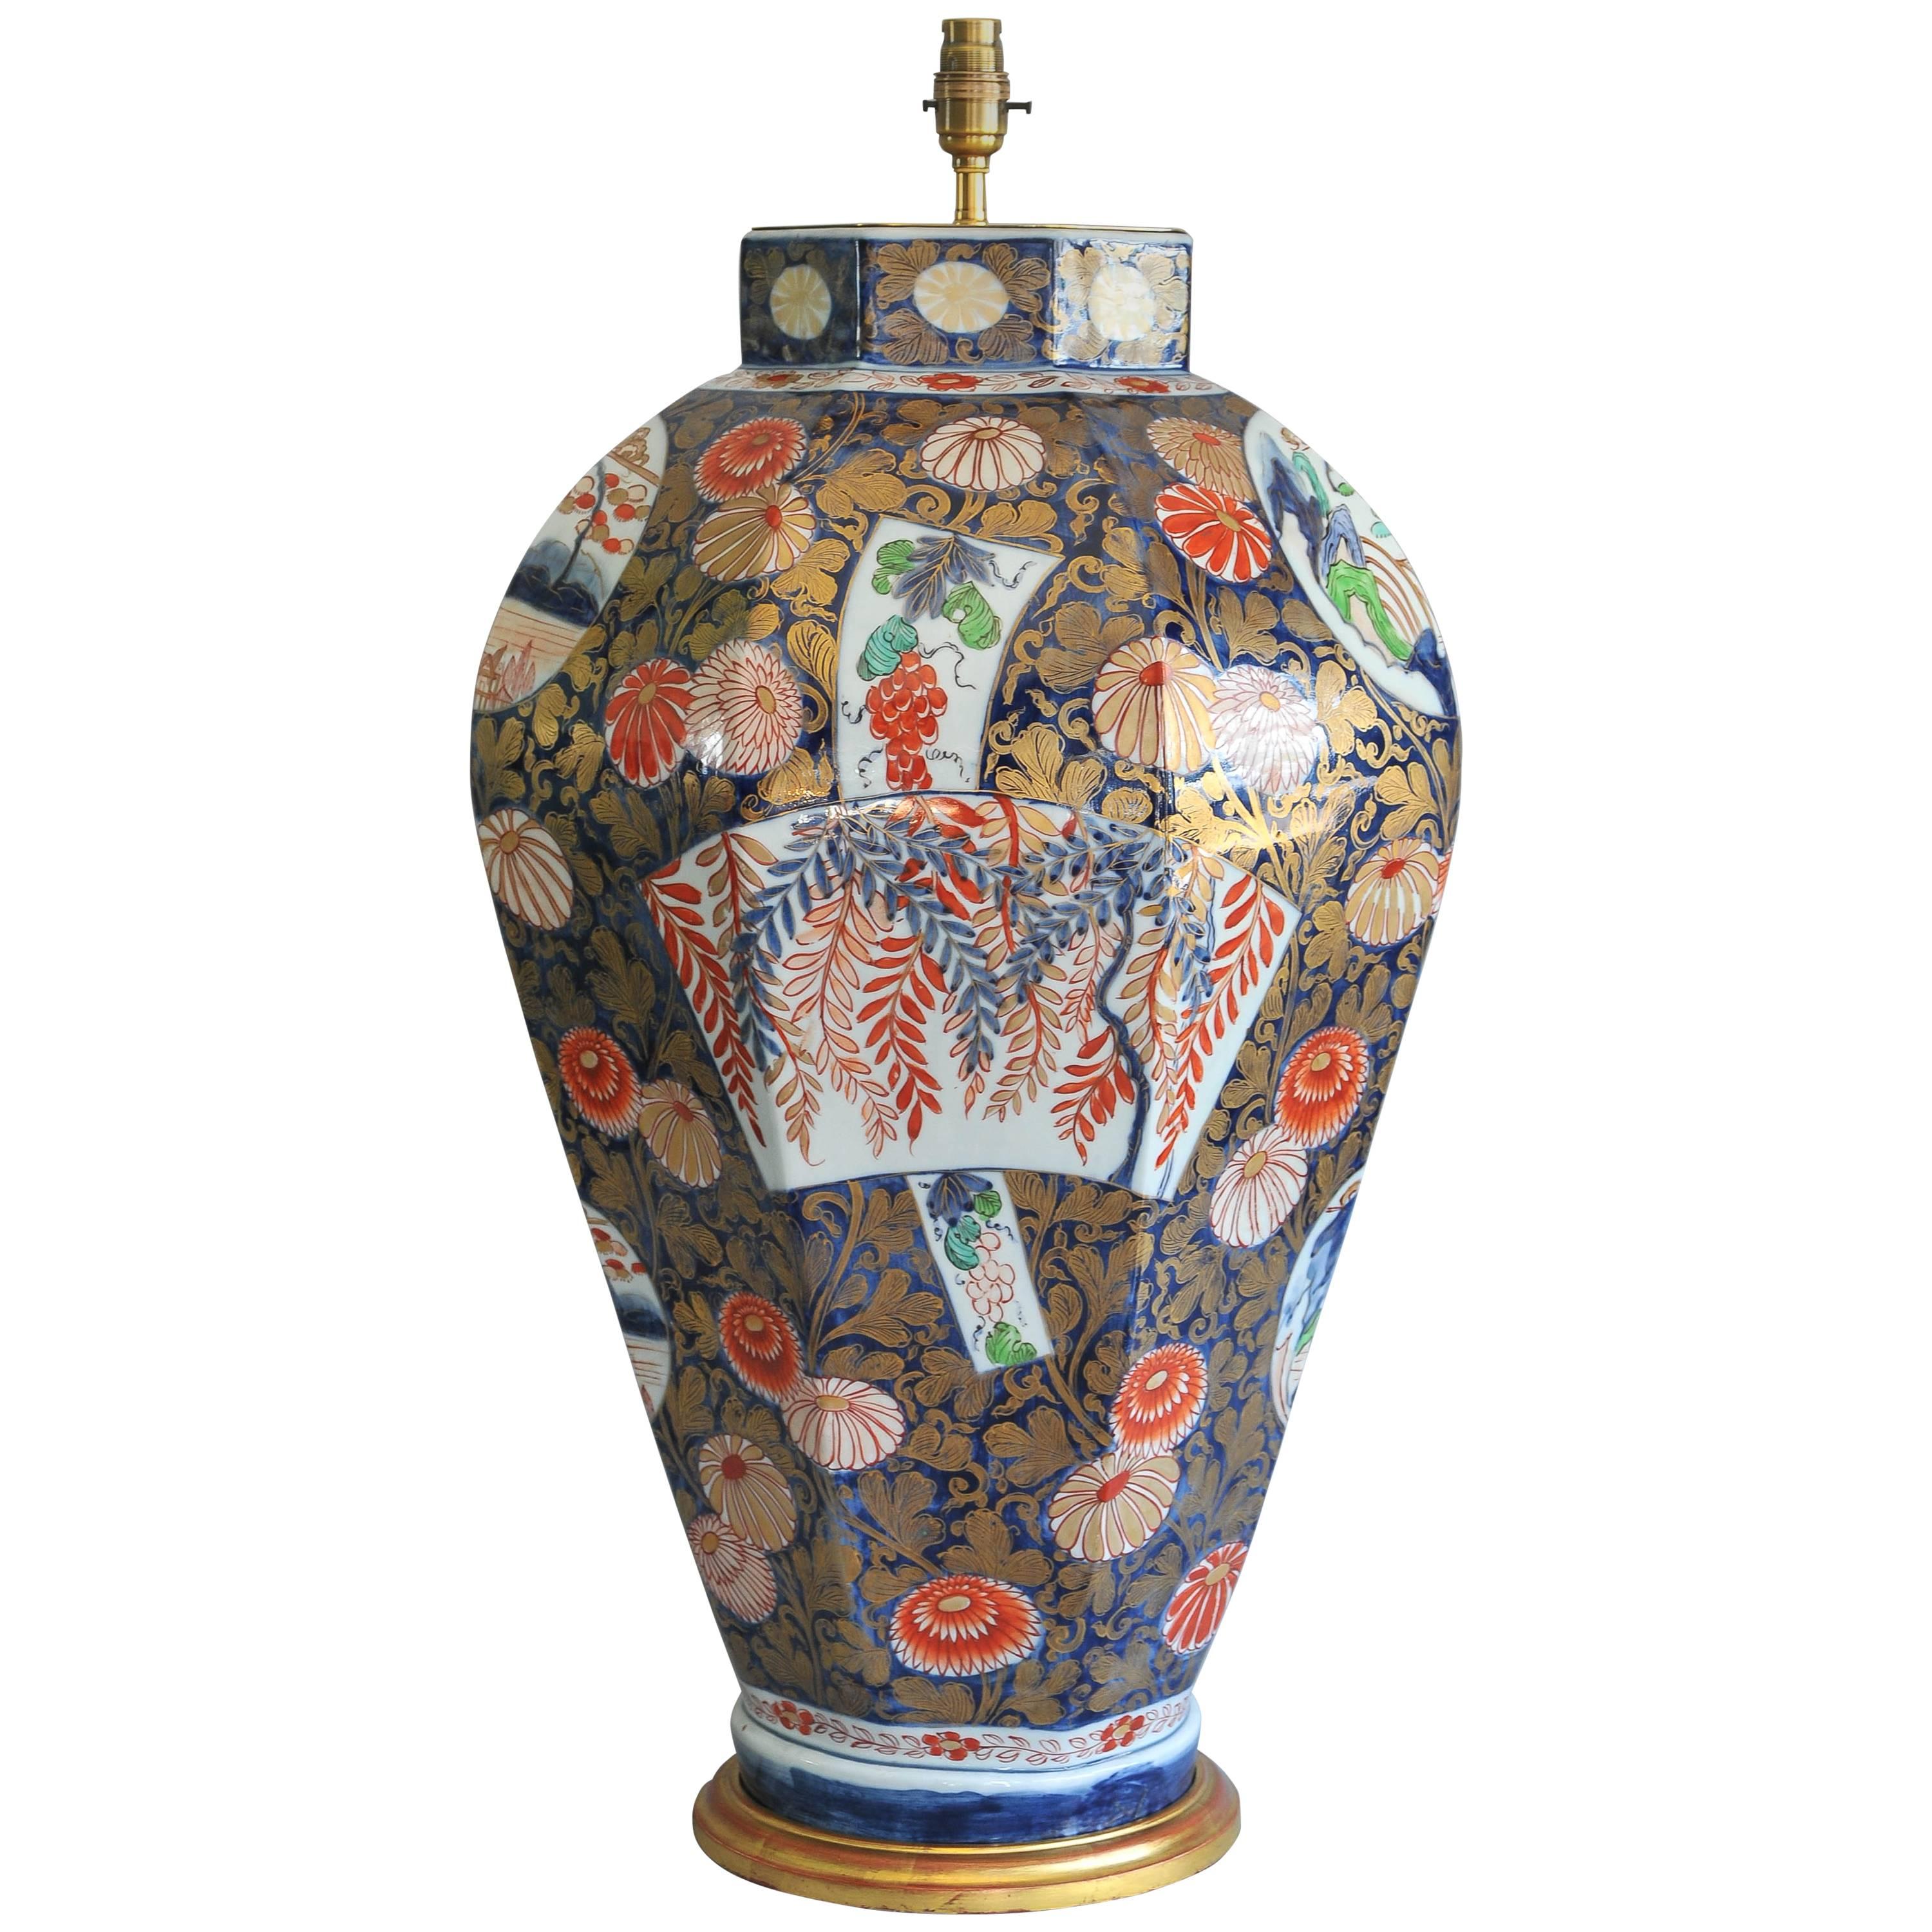 An Impressive 19th Century Imari Porcelain Lamped Vase